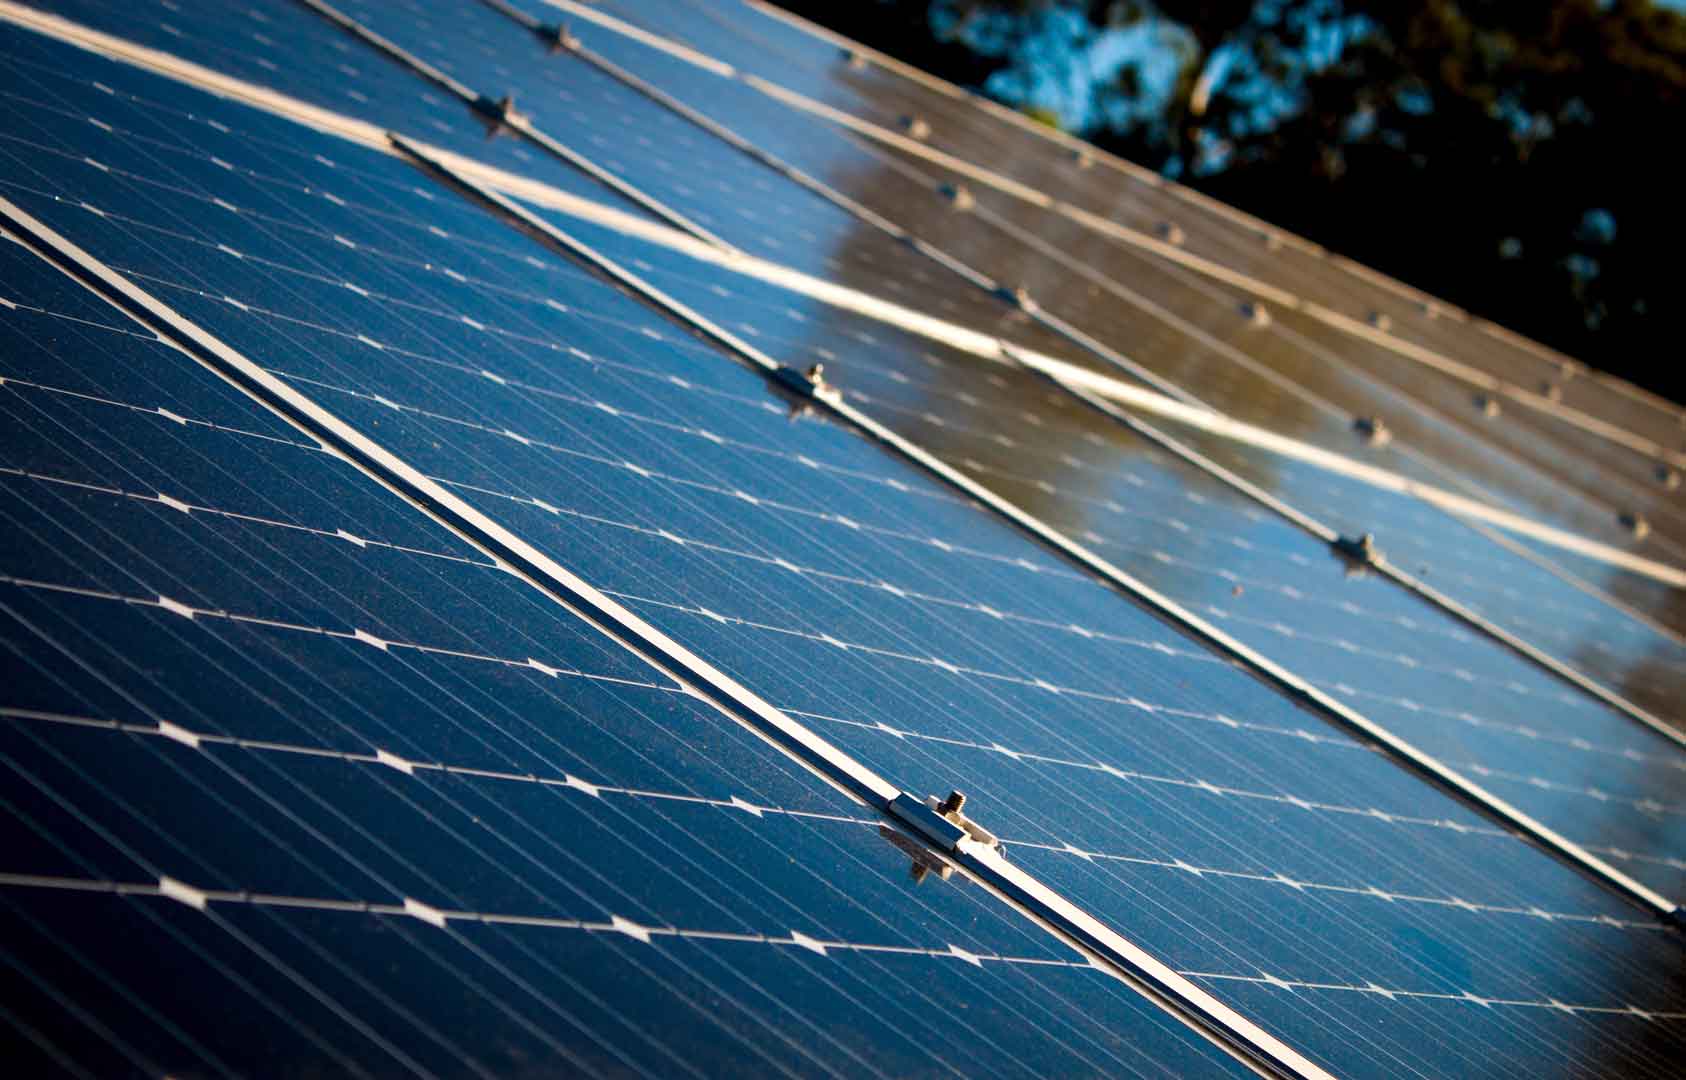 Best Quality Solar Panels in Australia